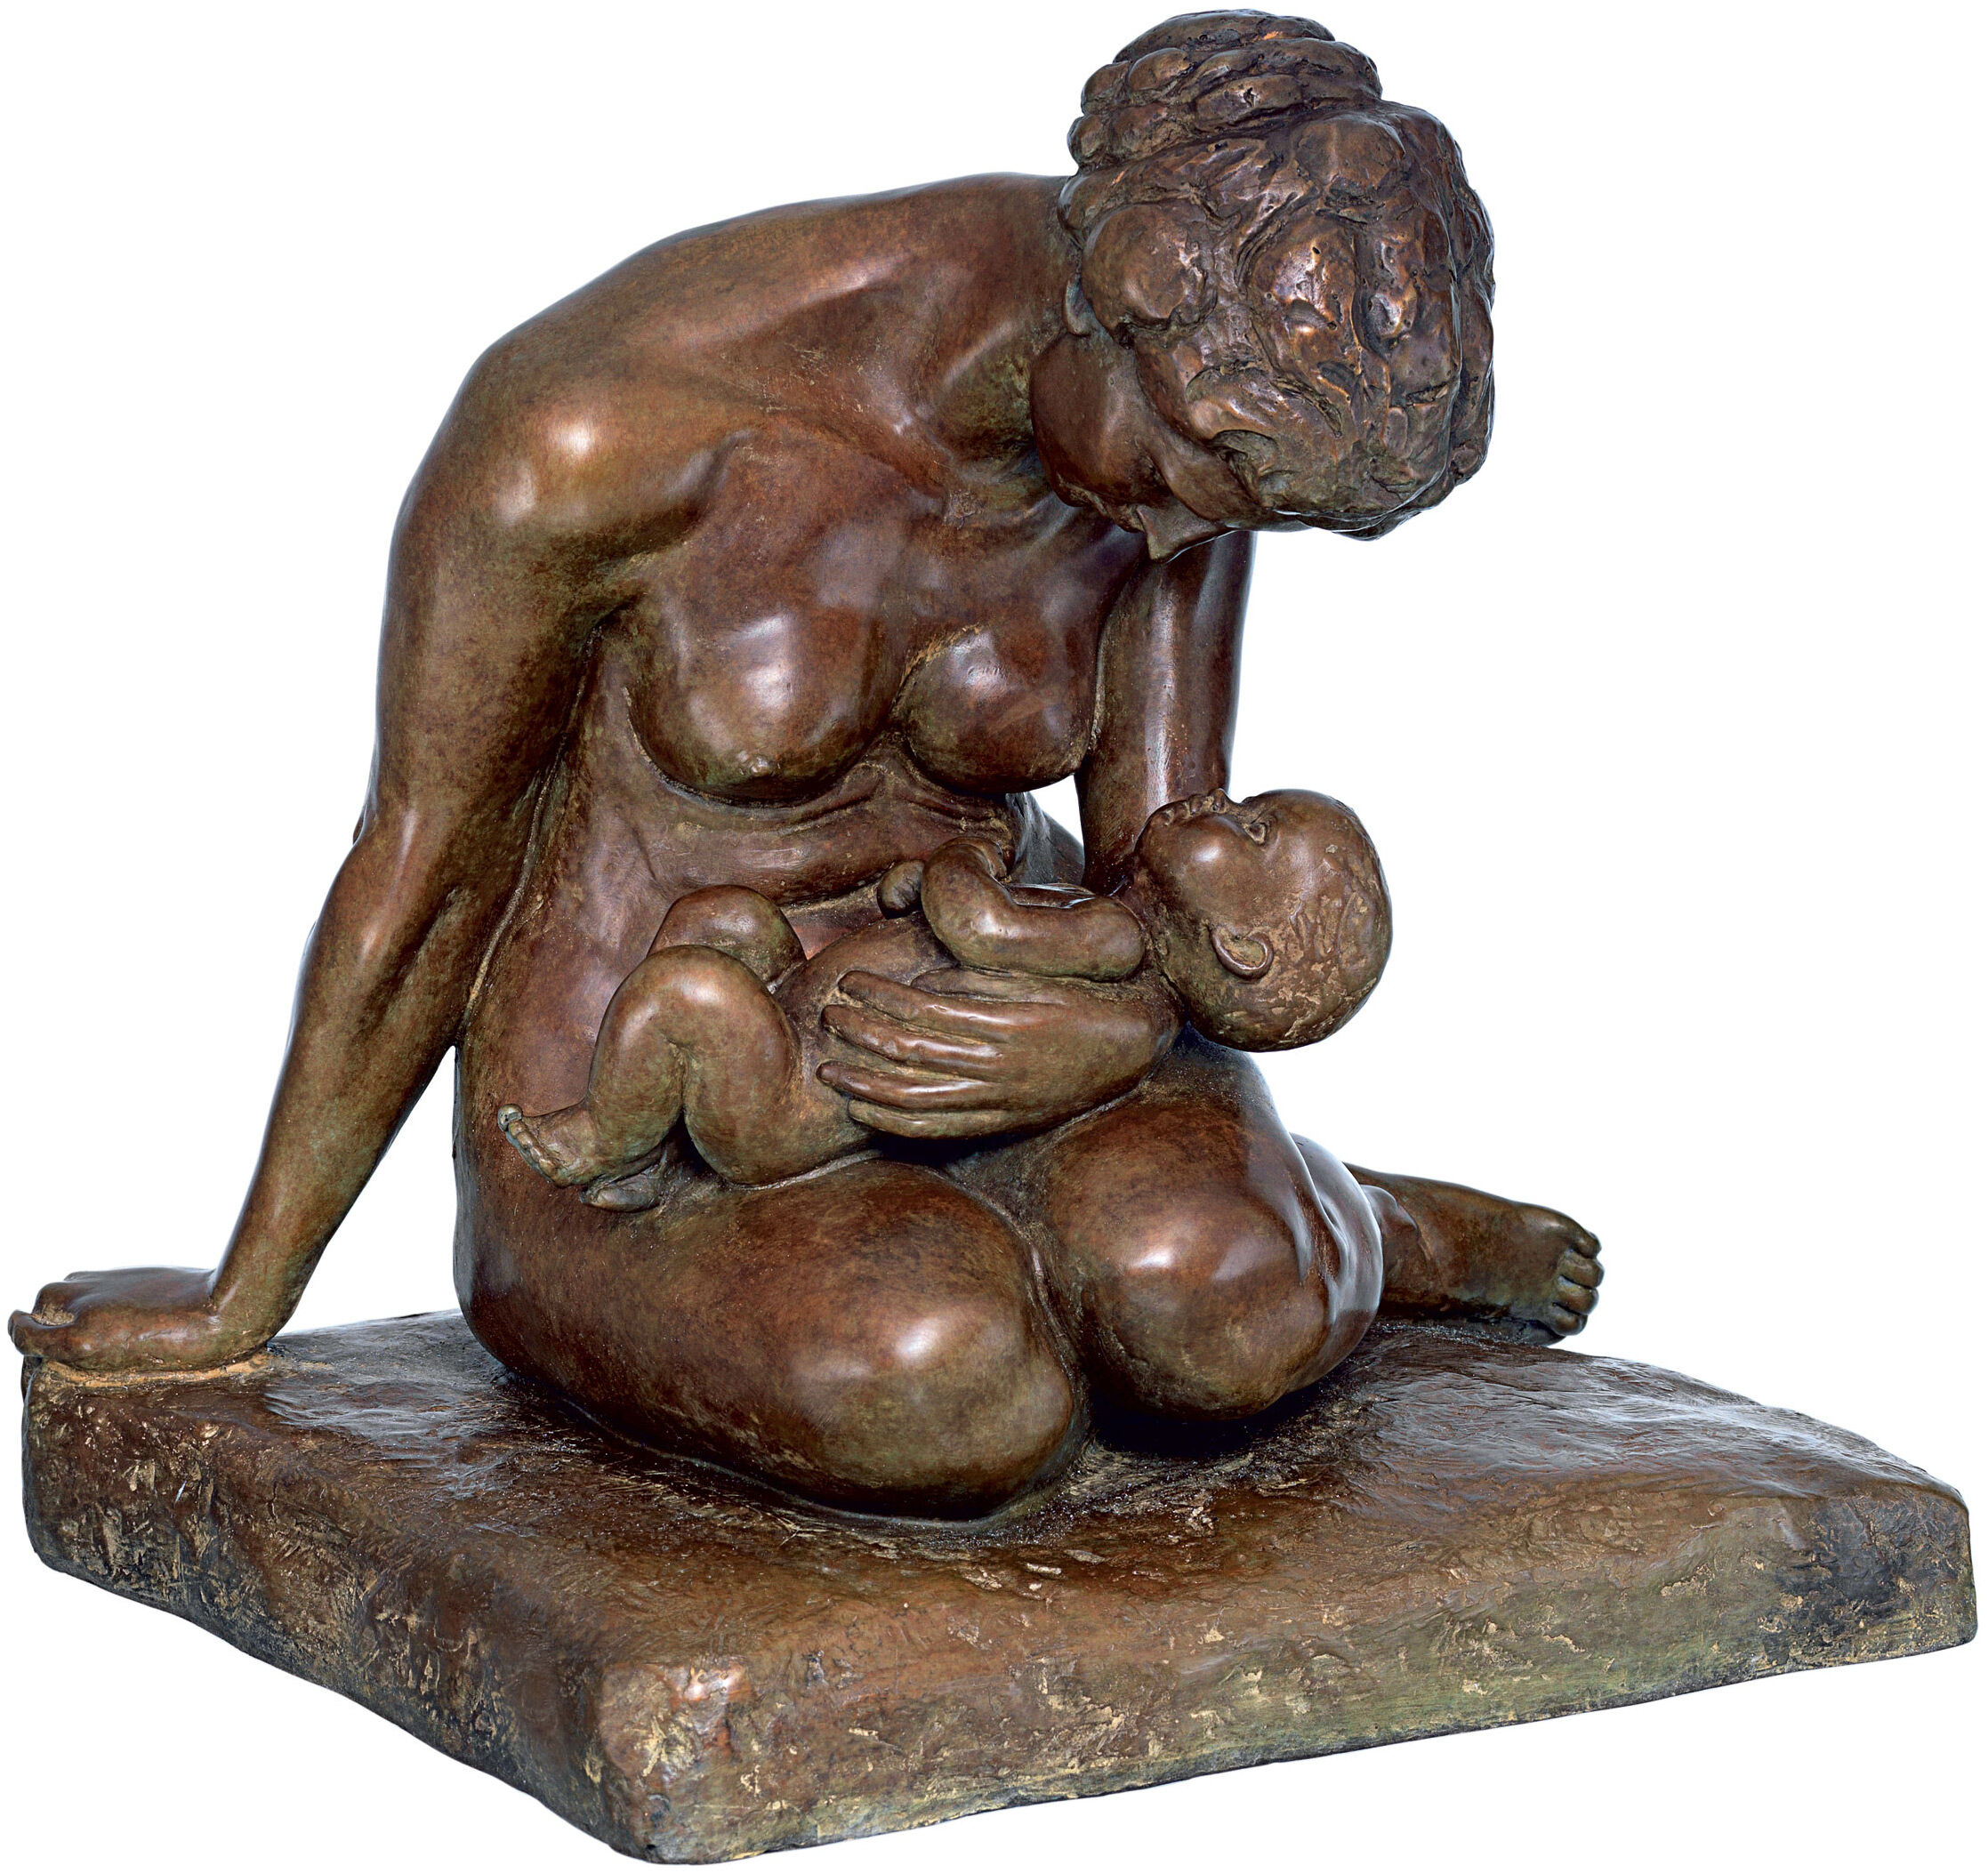 Skulptur "Mor med barn" (1907), bronzeversion von Wilhelm Lehmbruck